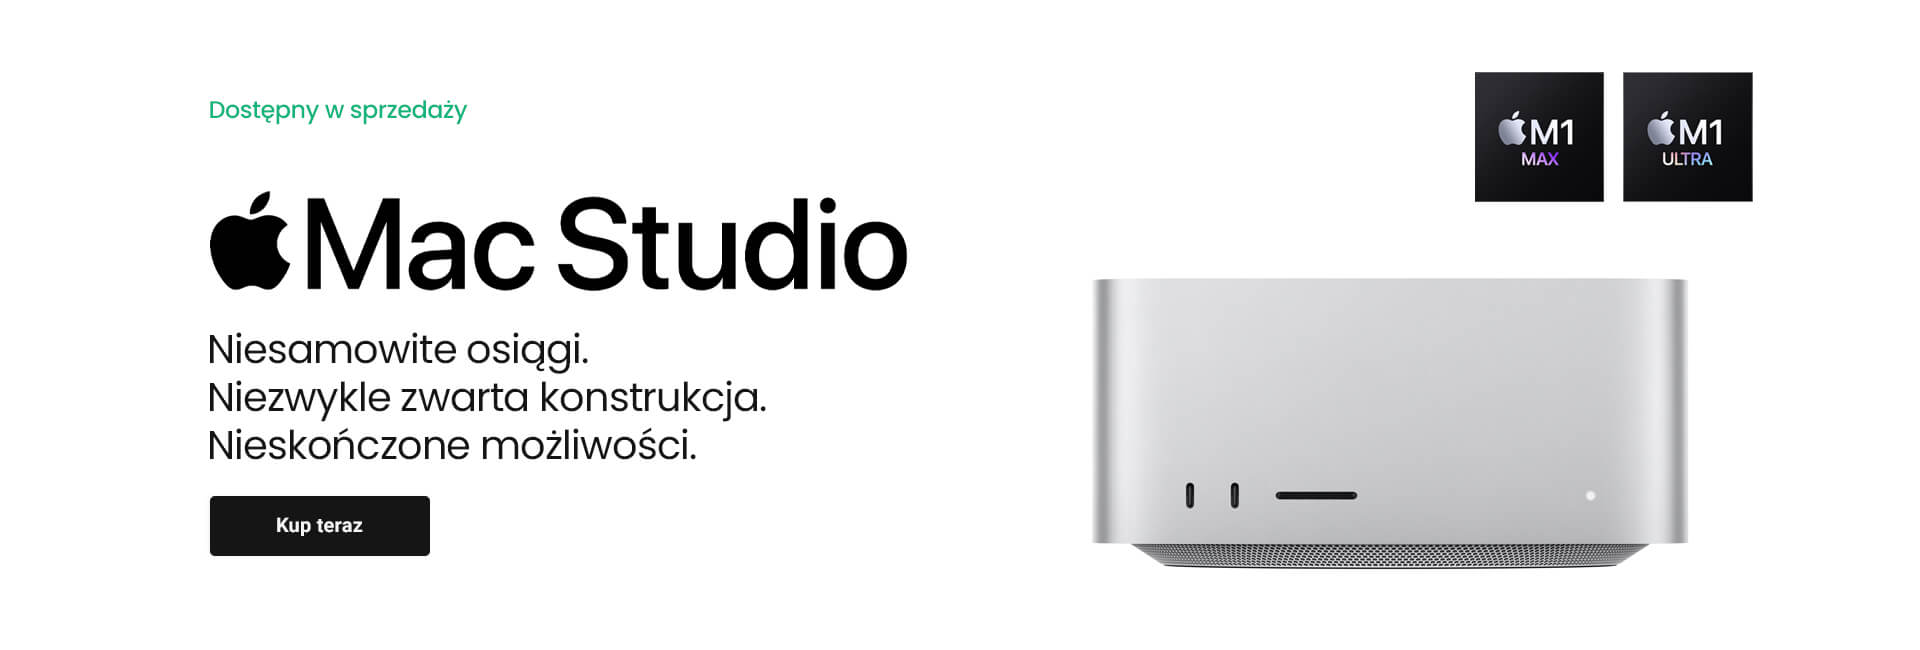 Mac Studio z procesorem M1 Ultra